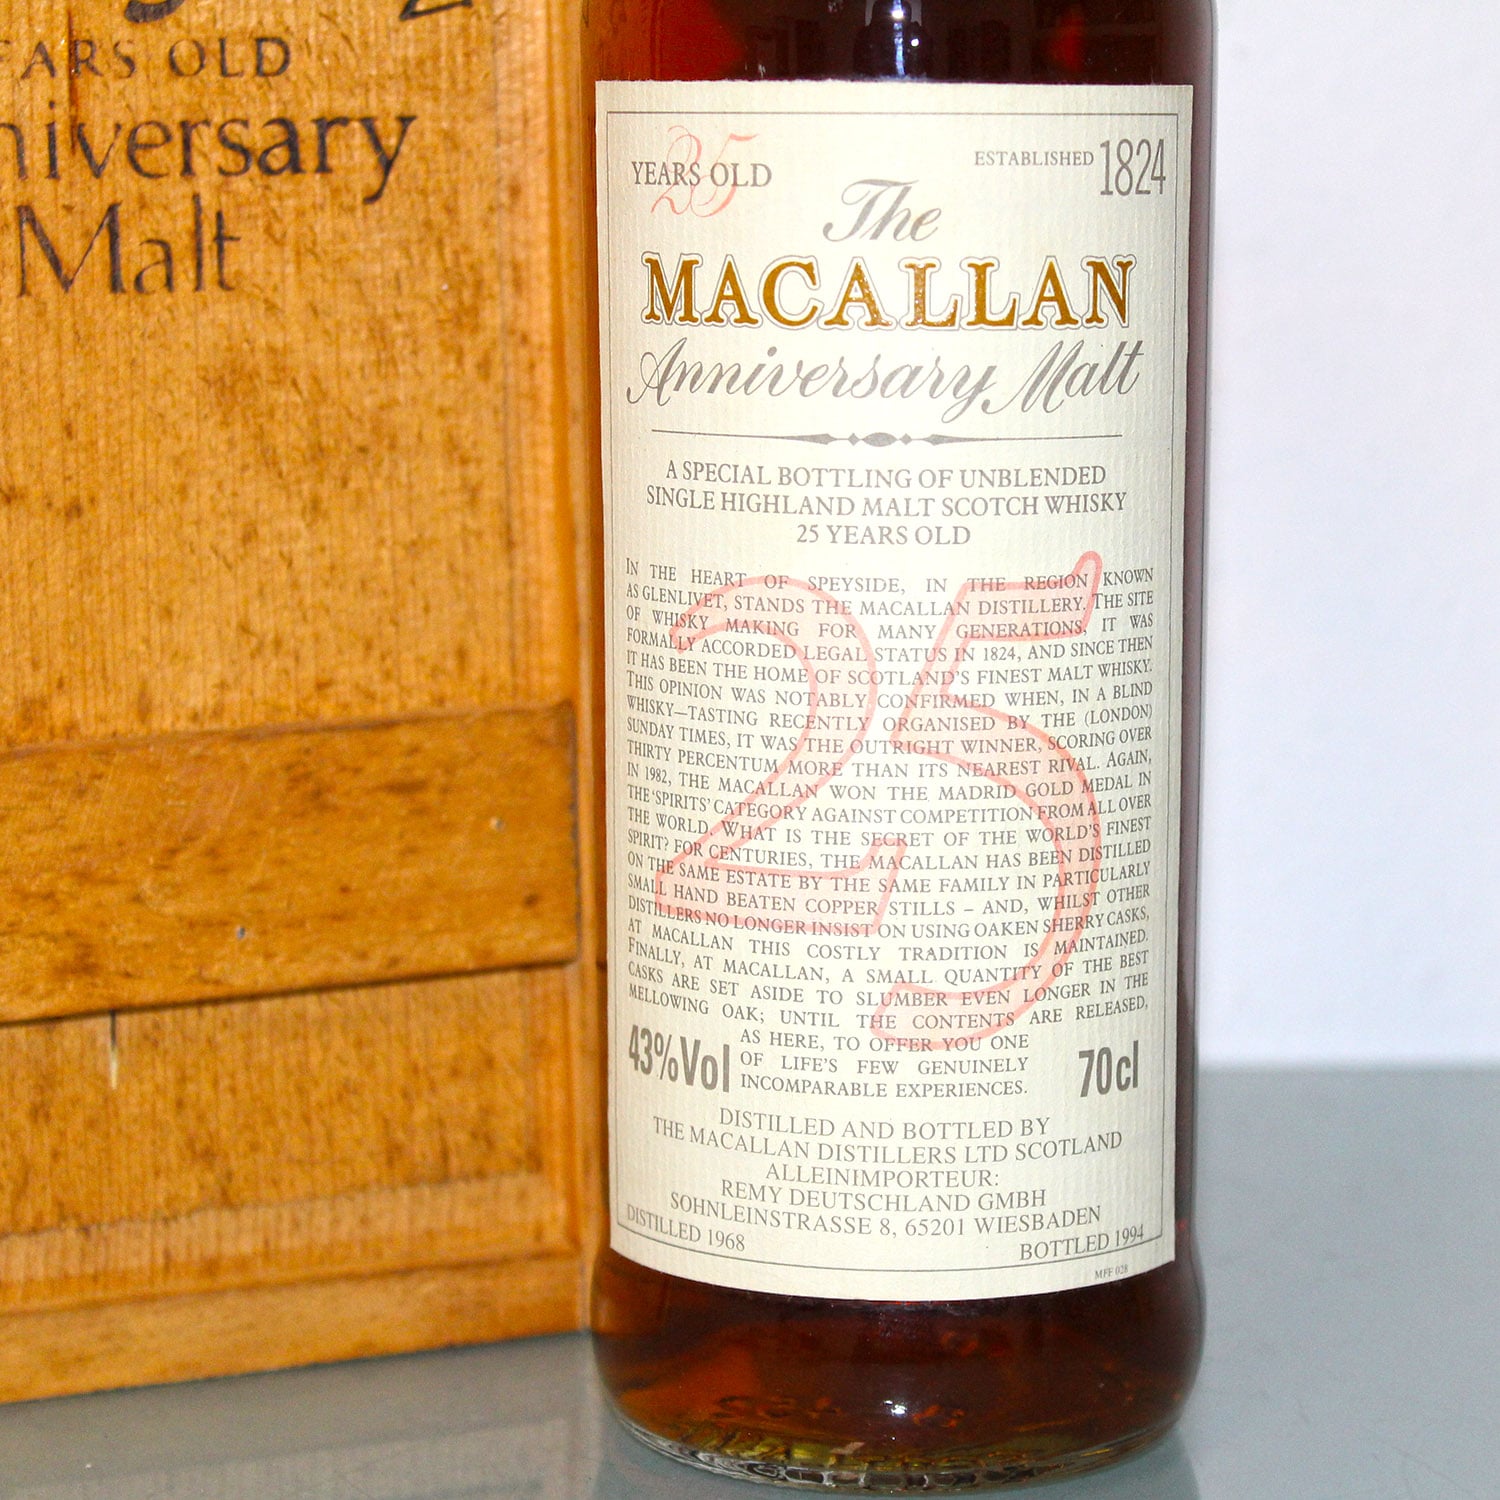 Macallan 1968 25 Years Anniversary Malt label